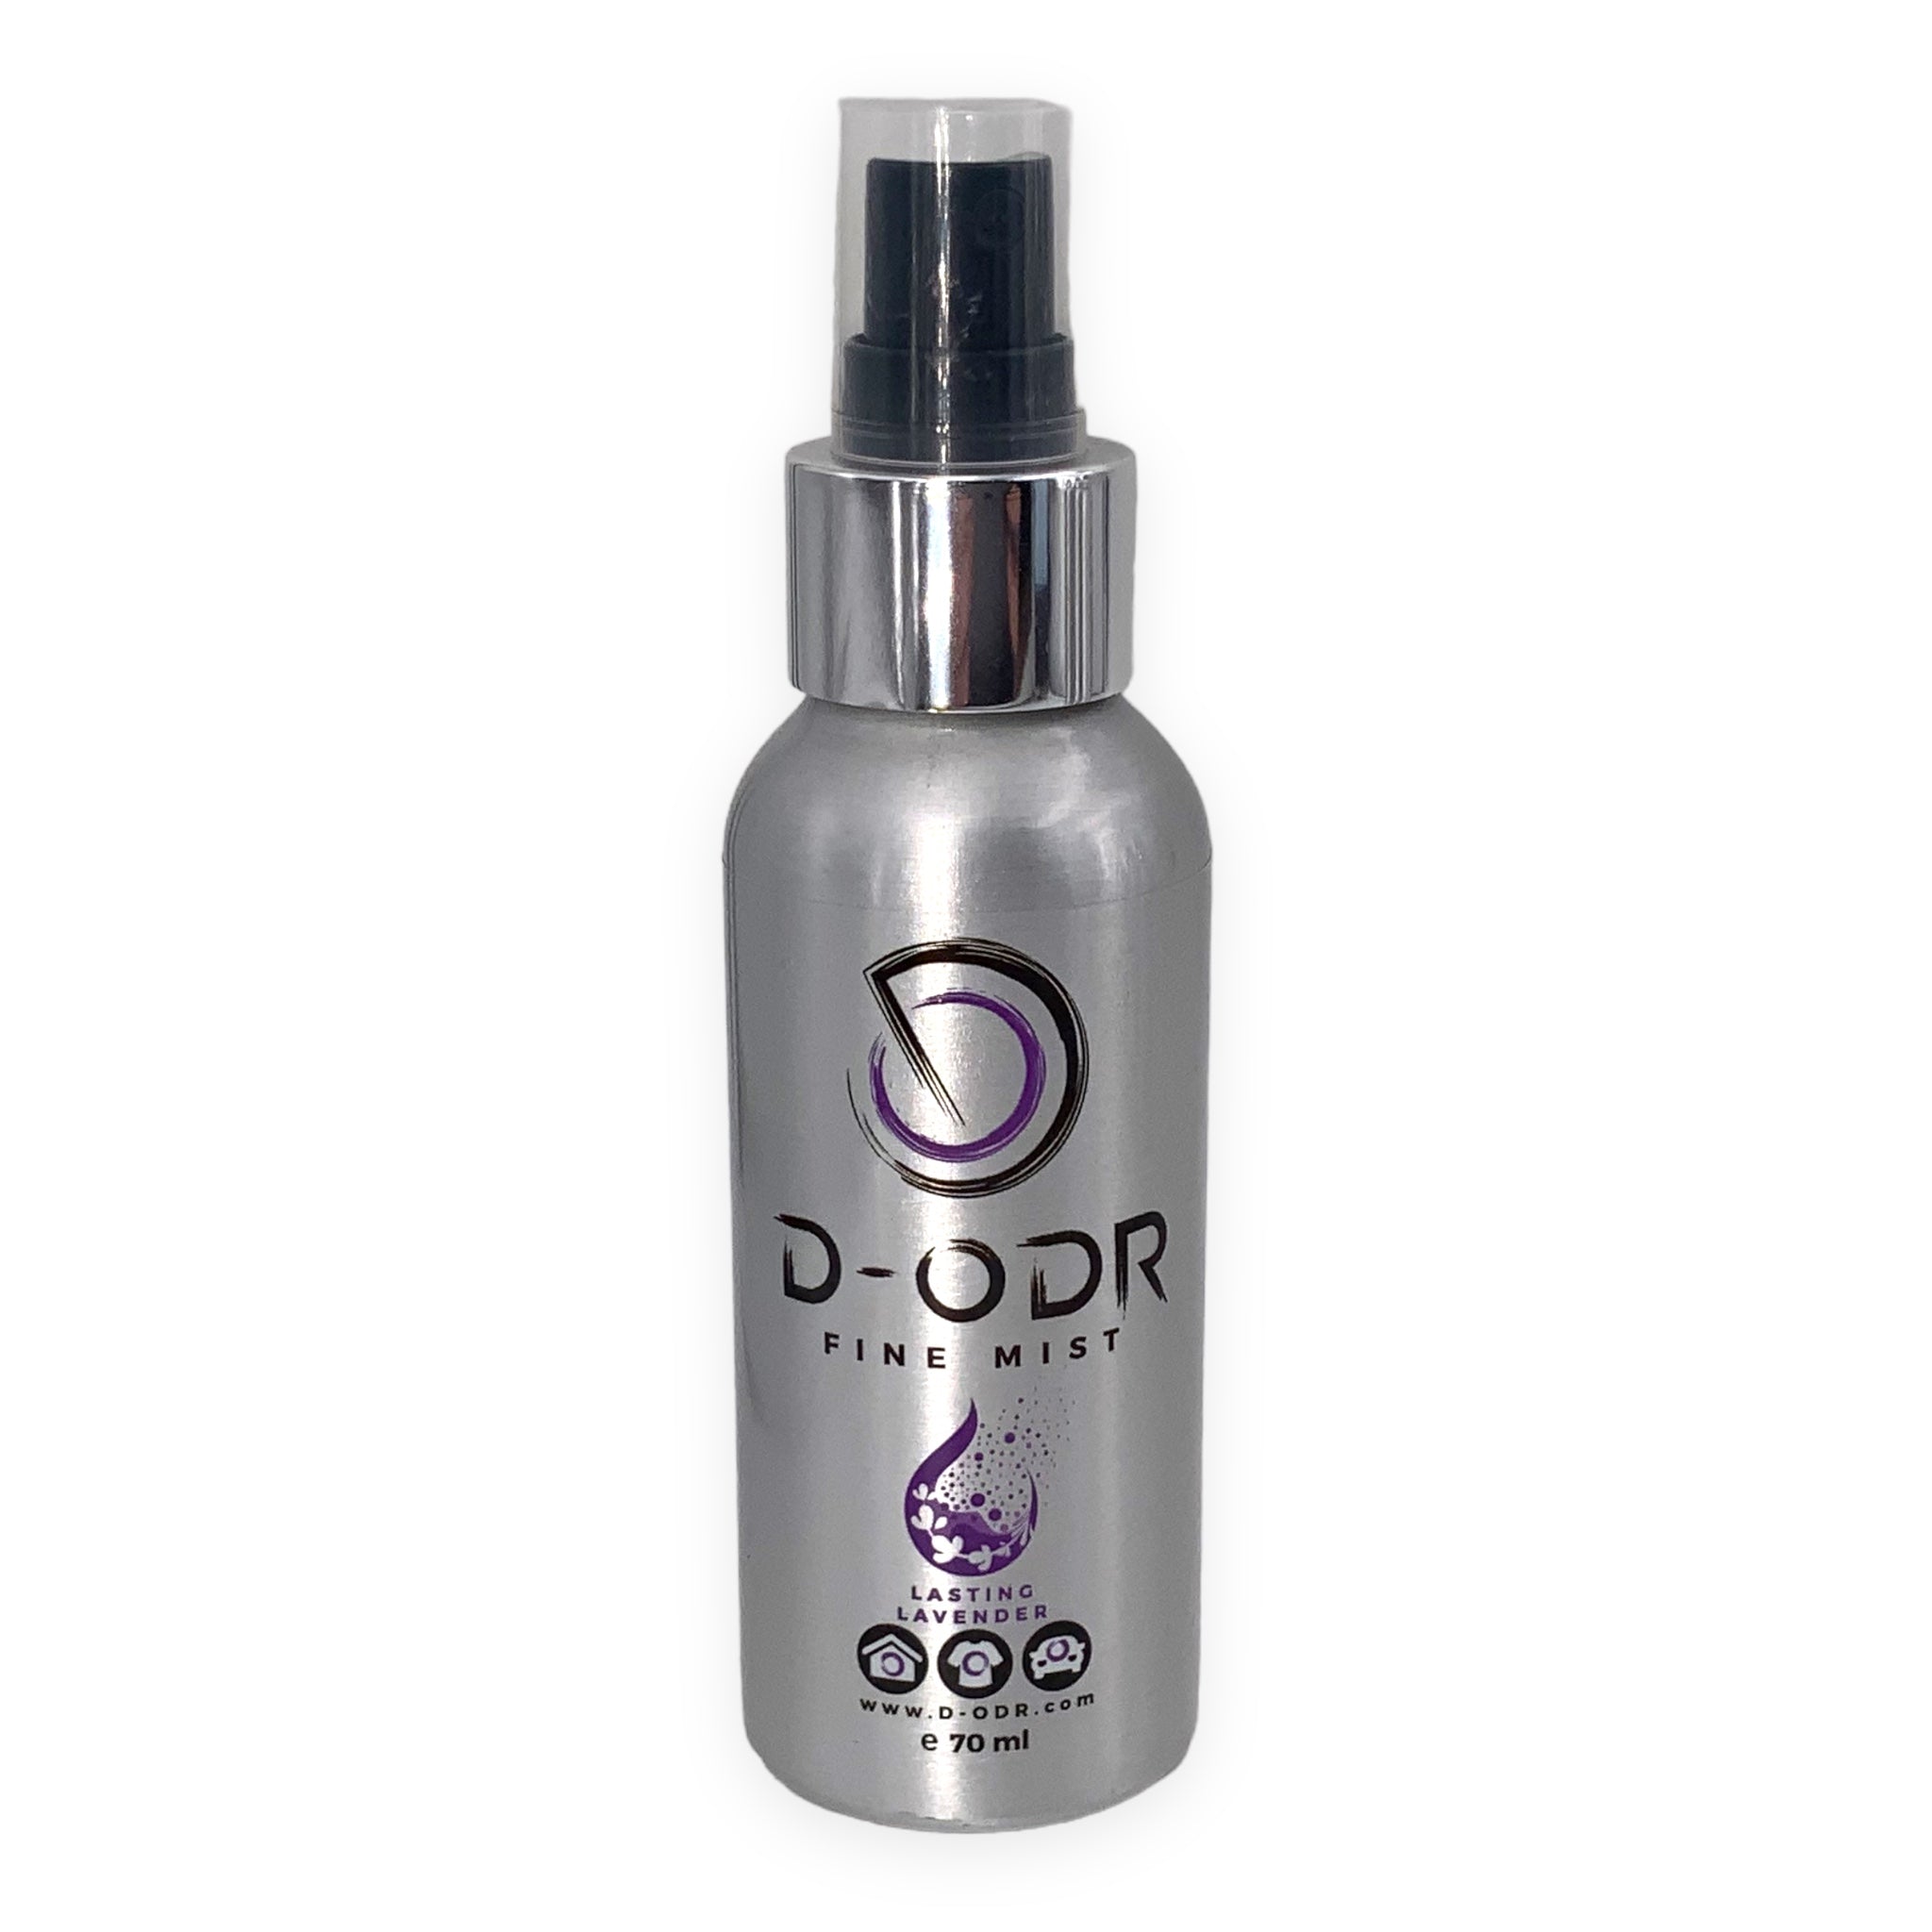 D-ODR Fine Mist - odor remover spray 70ml different aromas